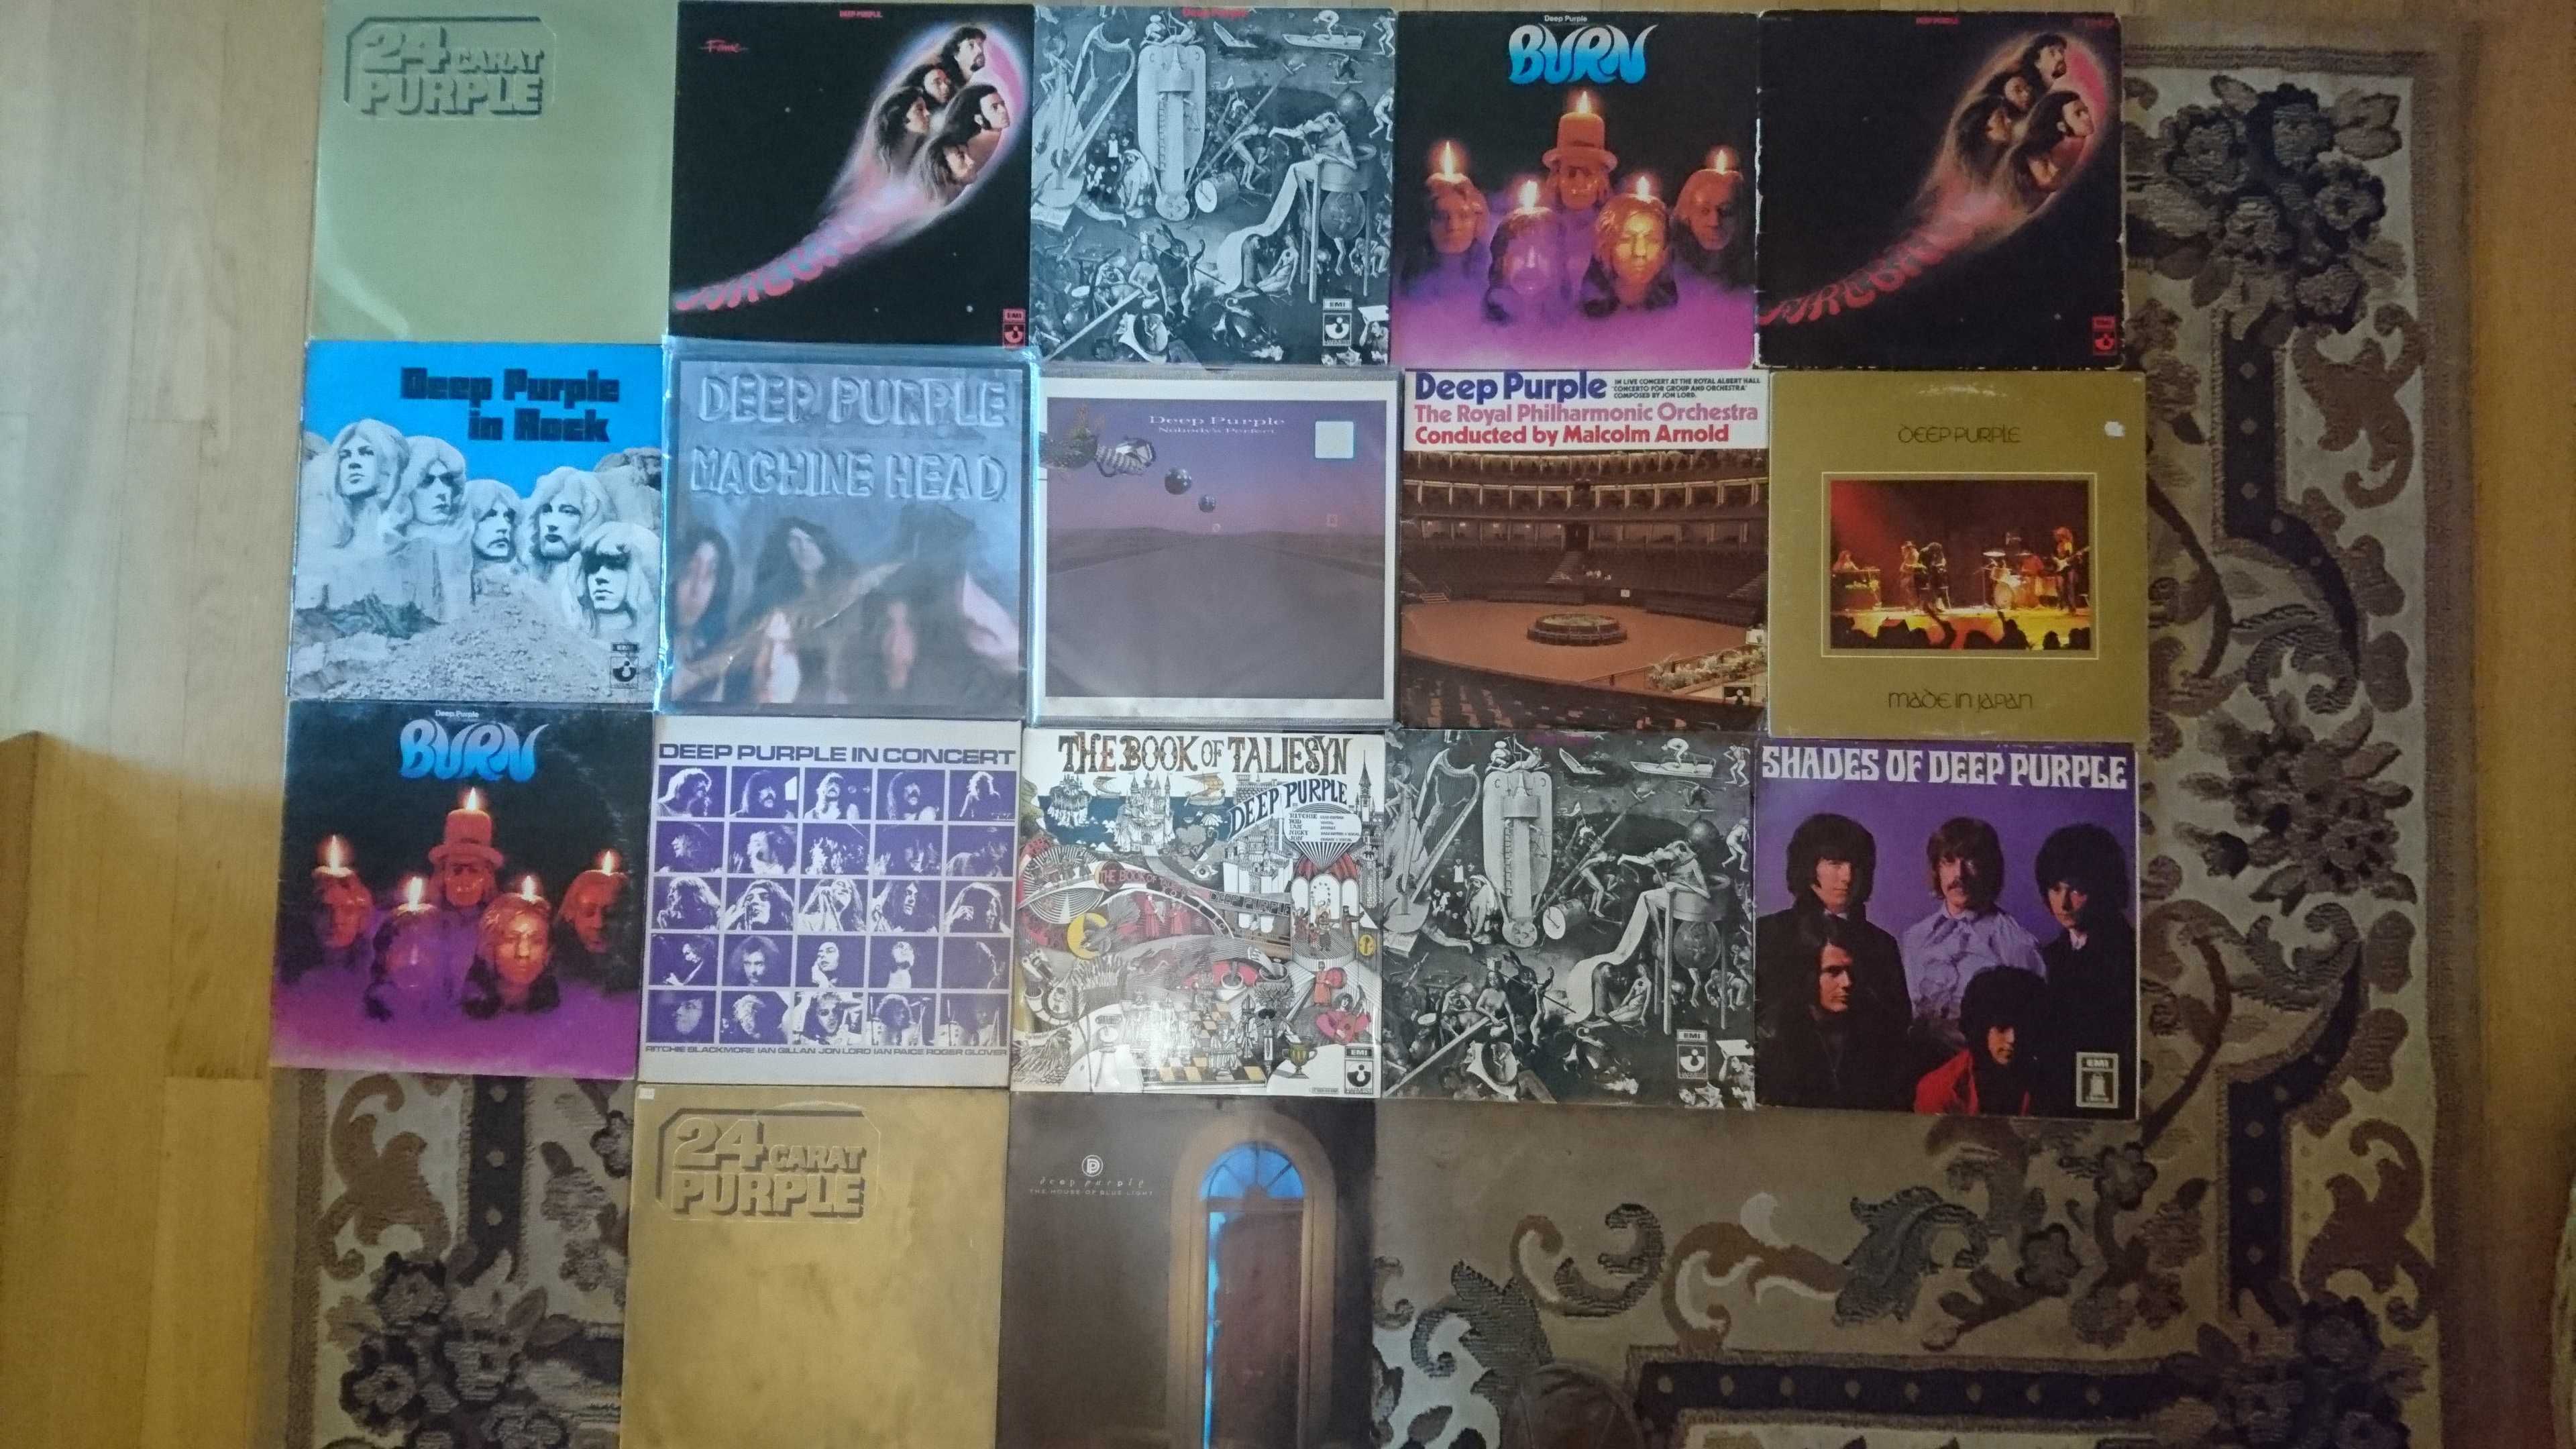 Deep Purple  24 Carat Purple  1975  UK  , 1975  (NM-/EX+) inne tytuły